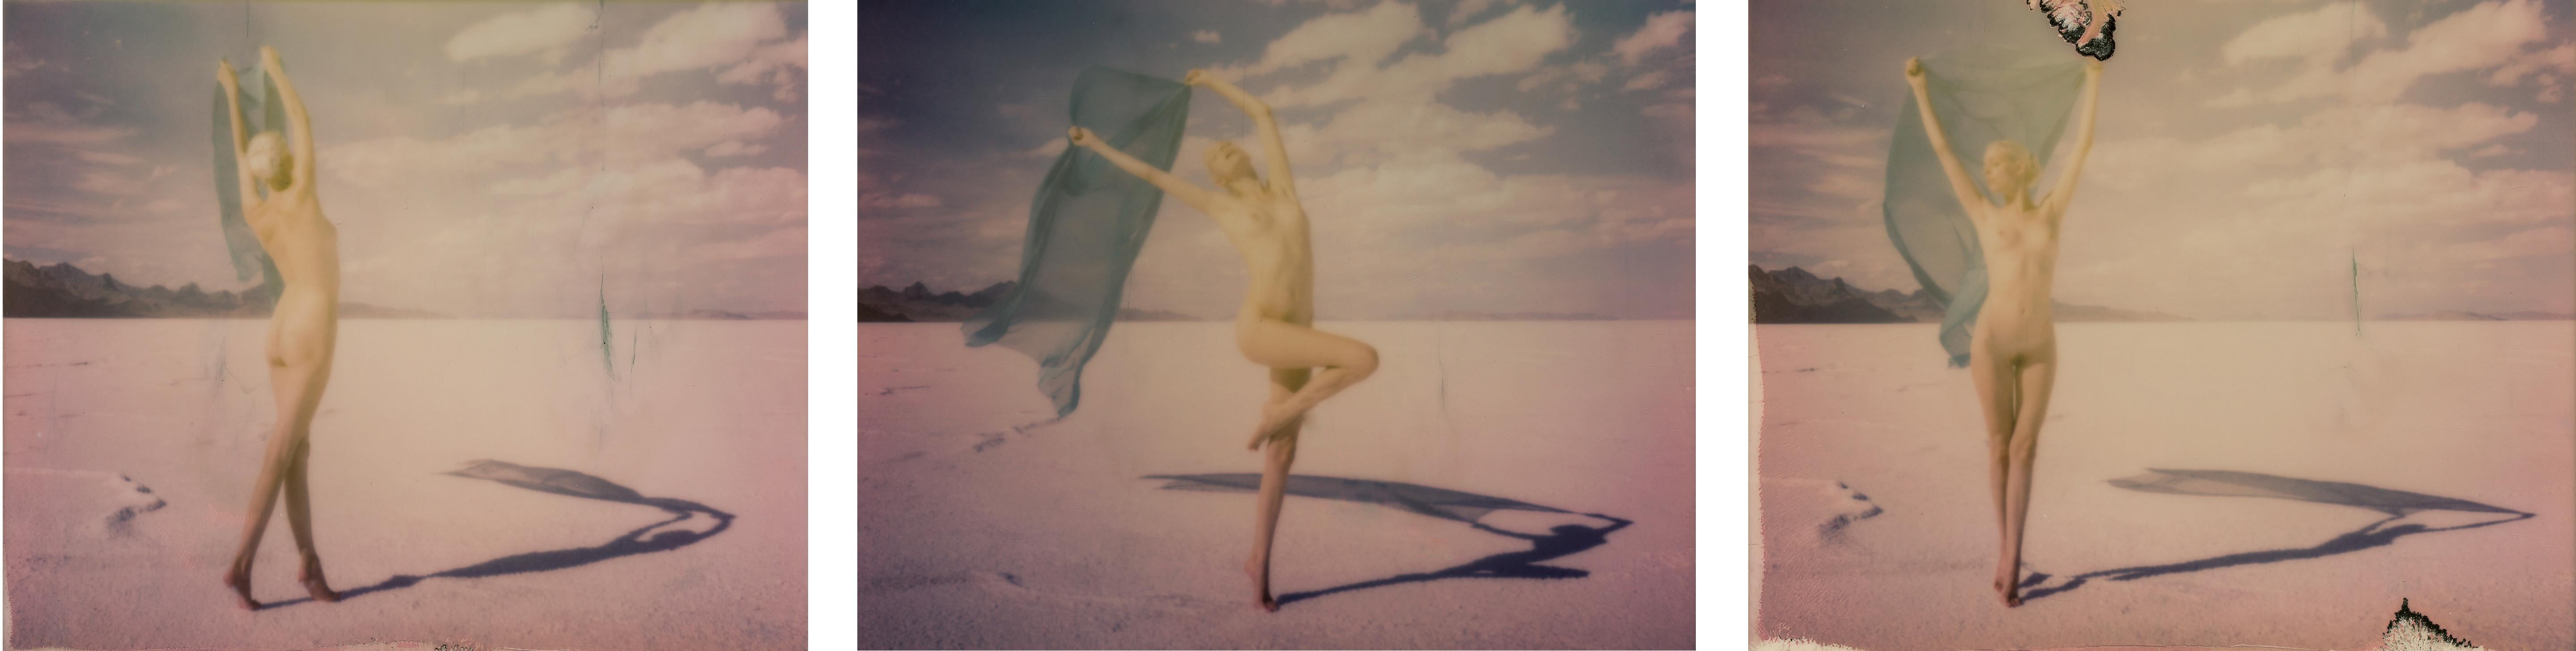 Shadowplay - triptych - 21st Century, Polaroid, Nude Photography, Contemporary